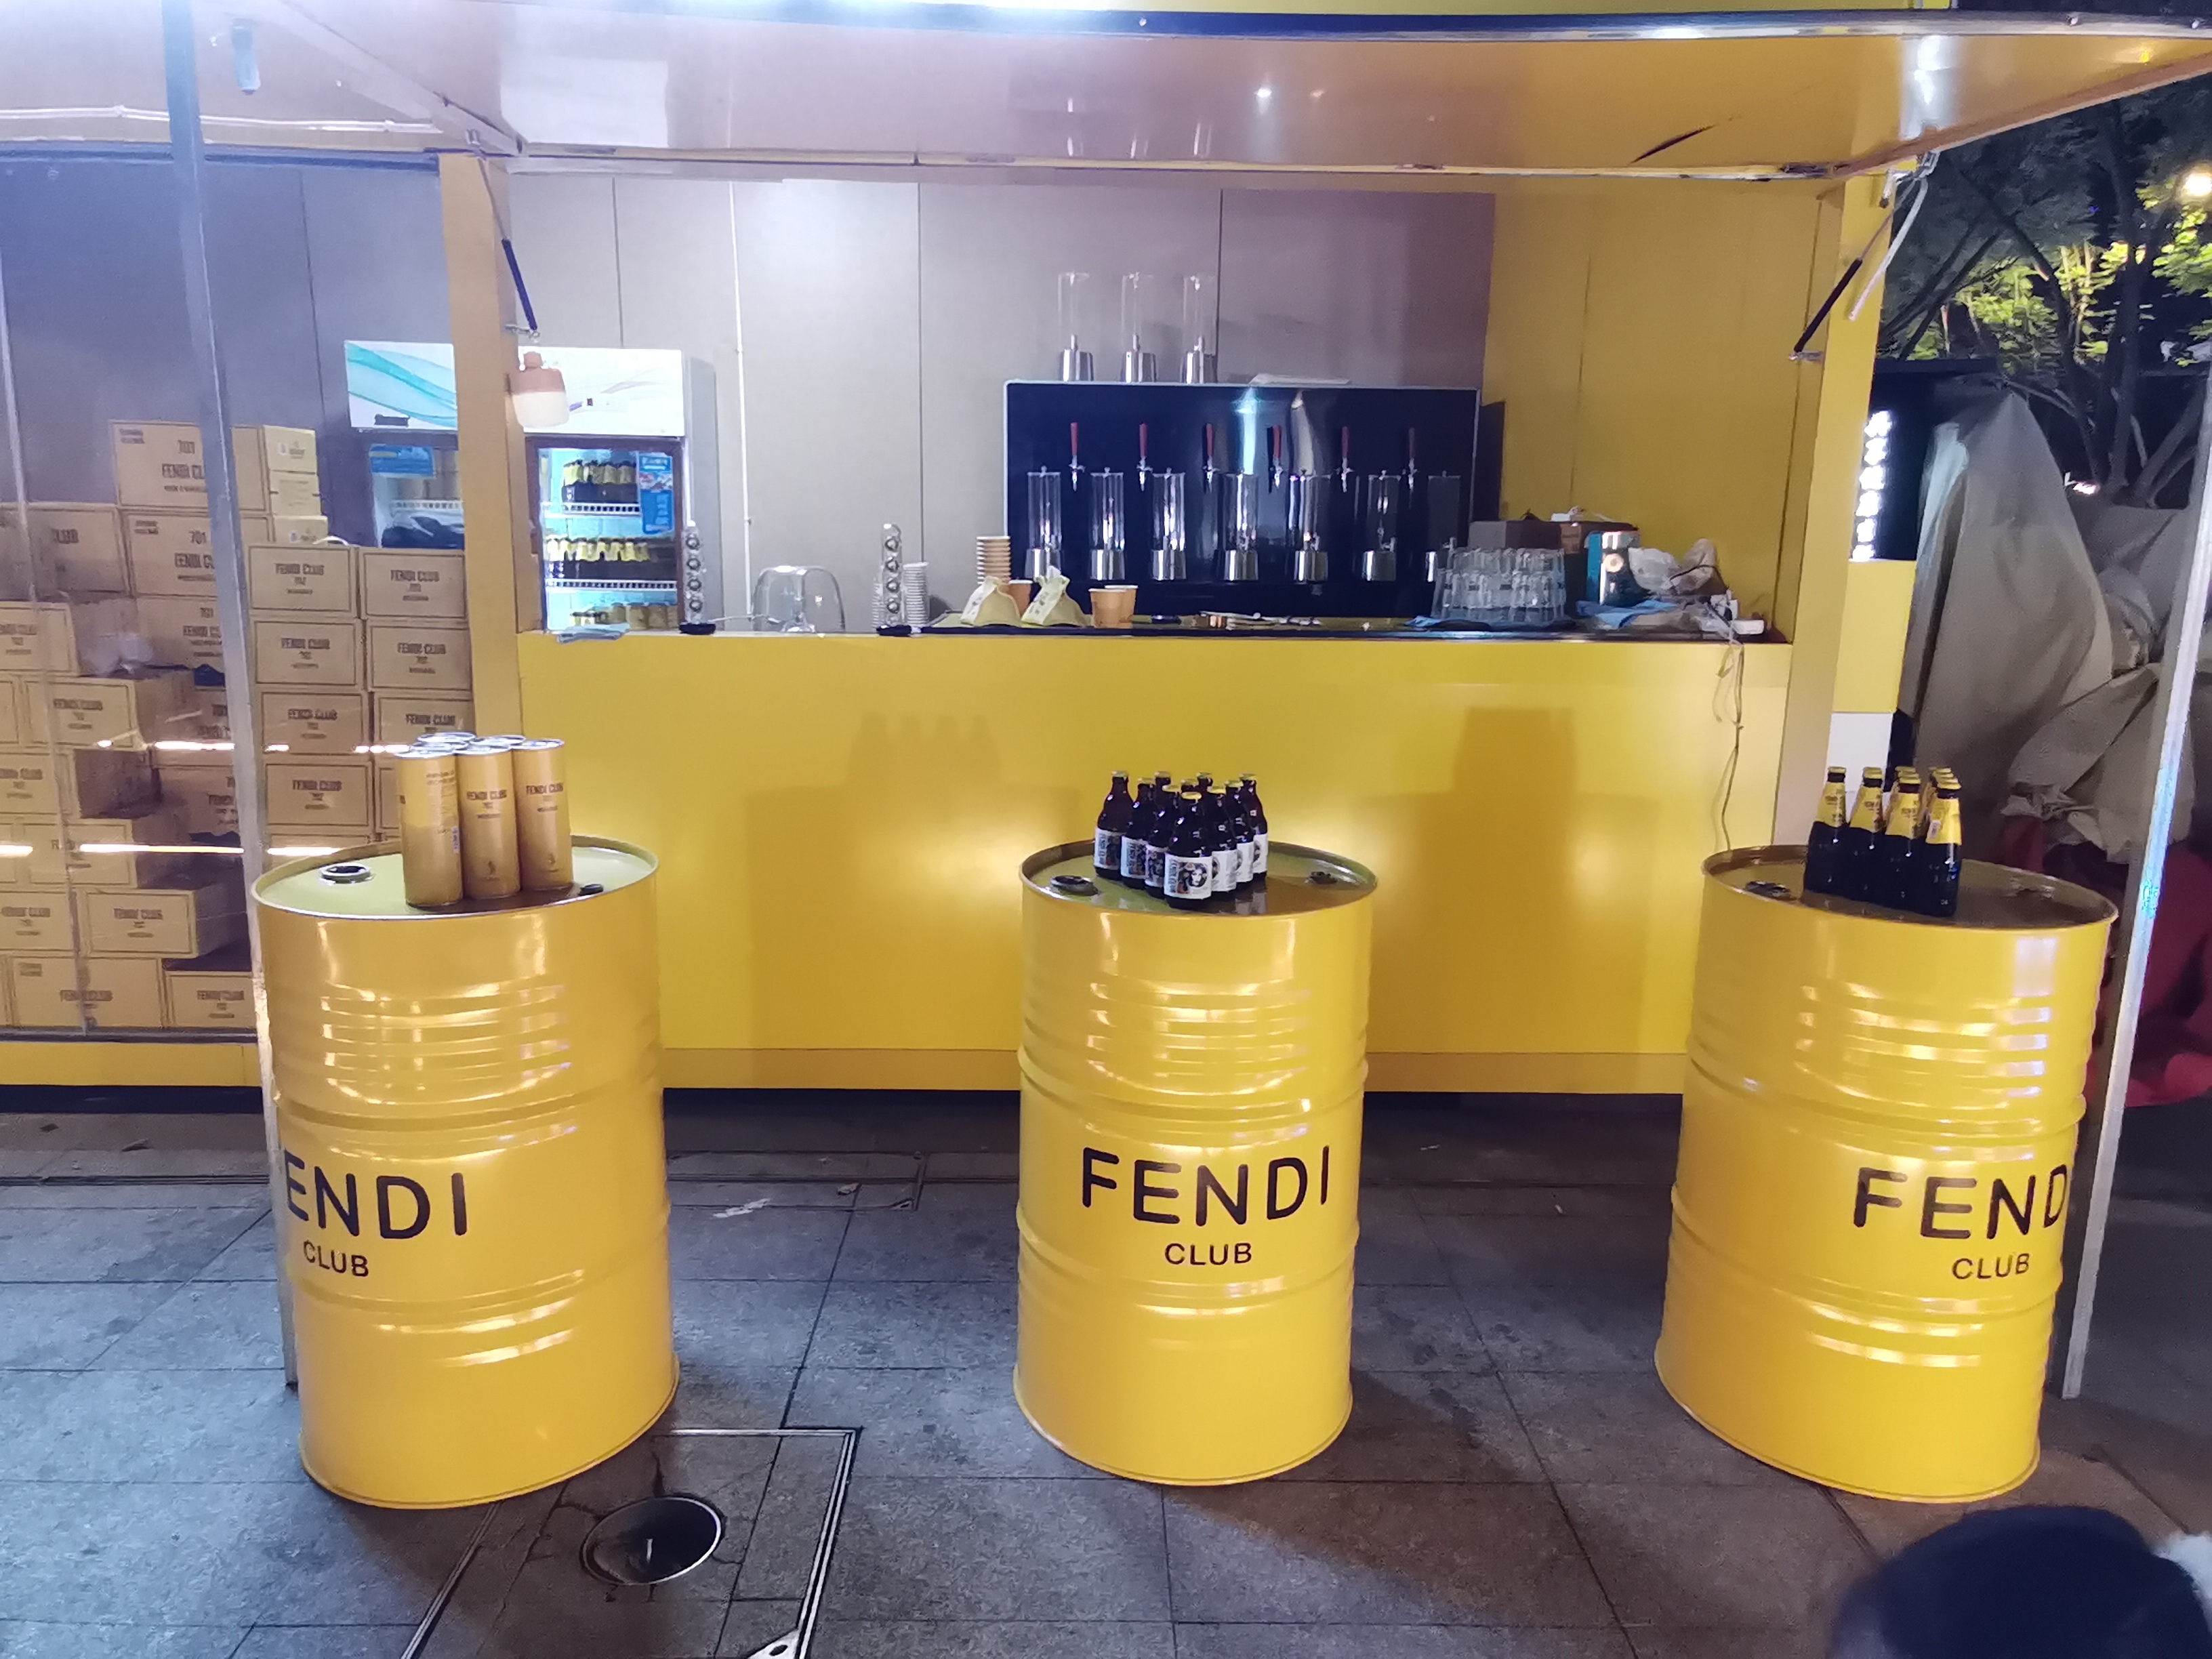 FENDI CLUB 啤酒是奢侈品吗？为